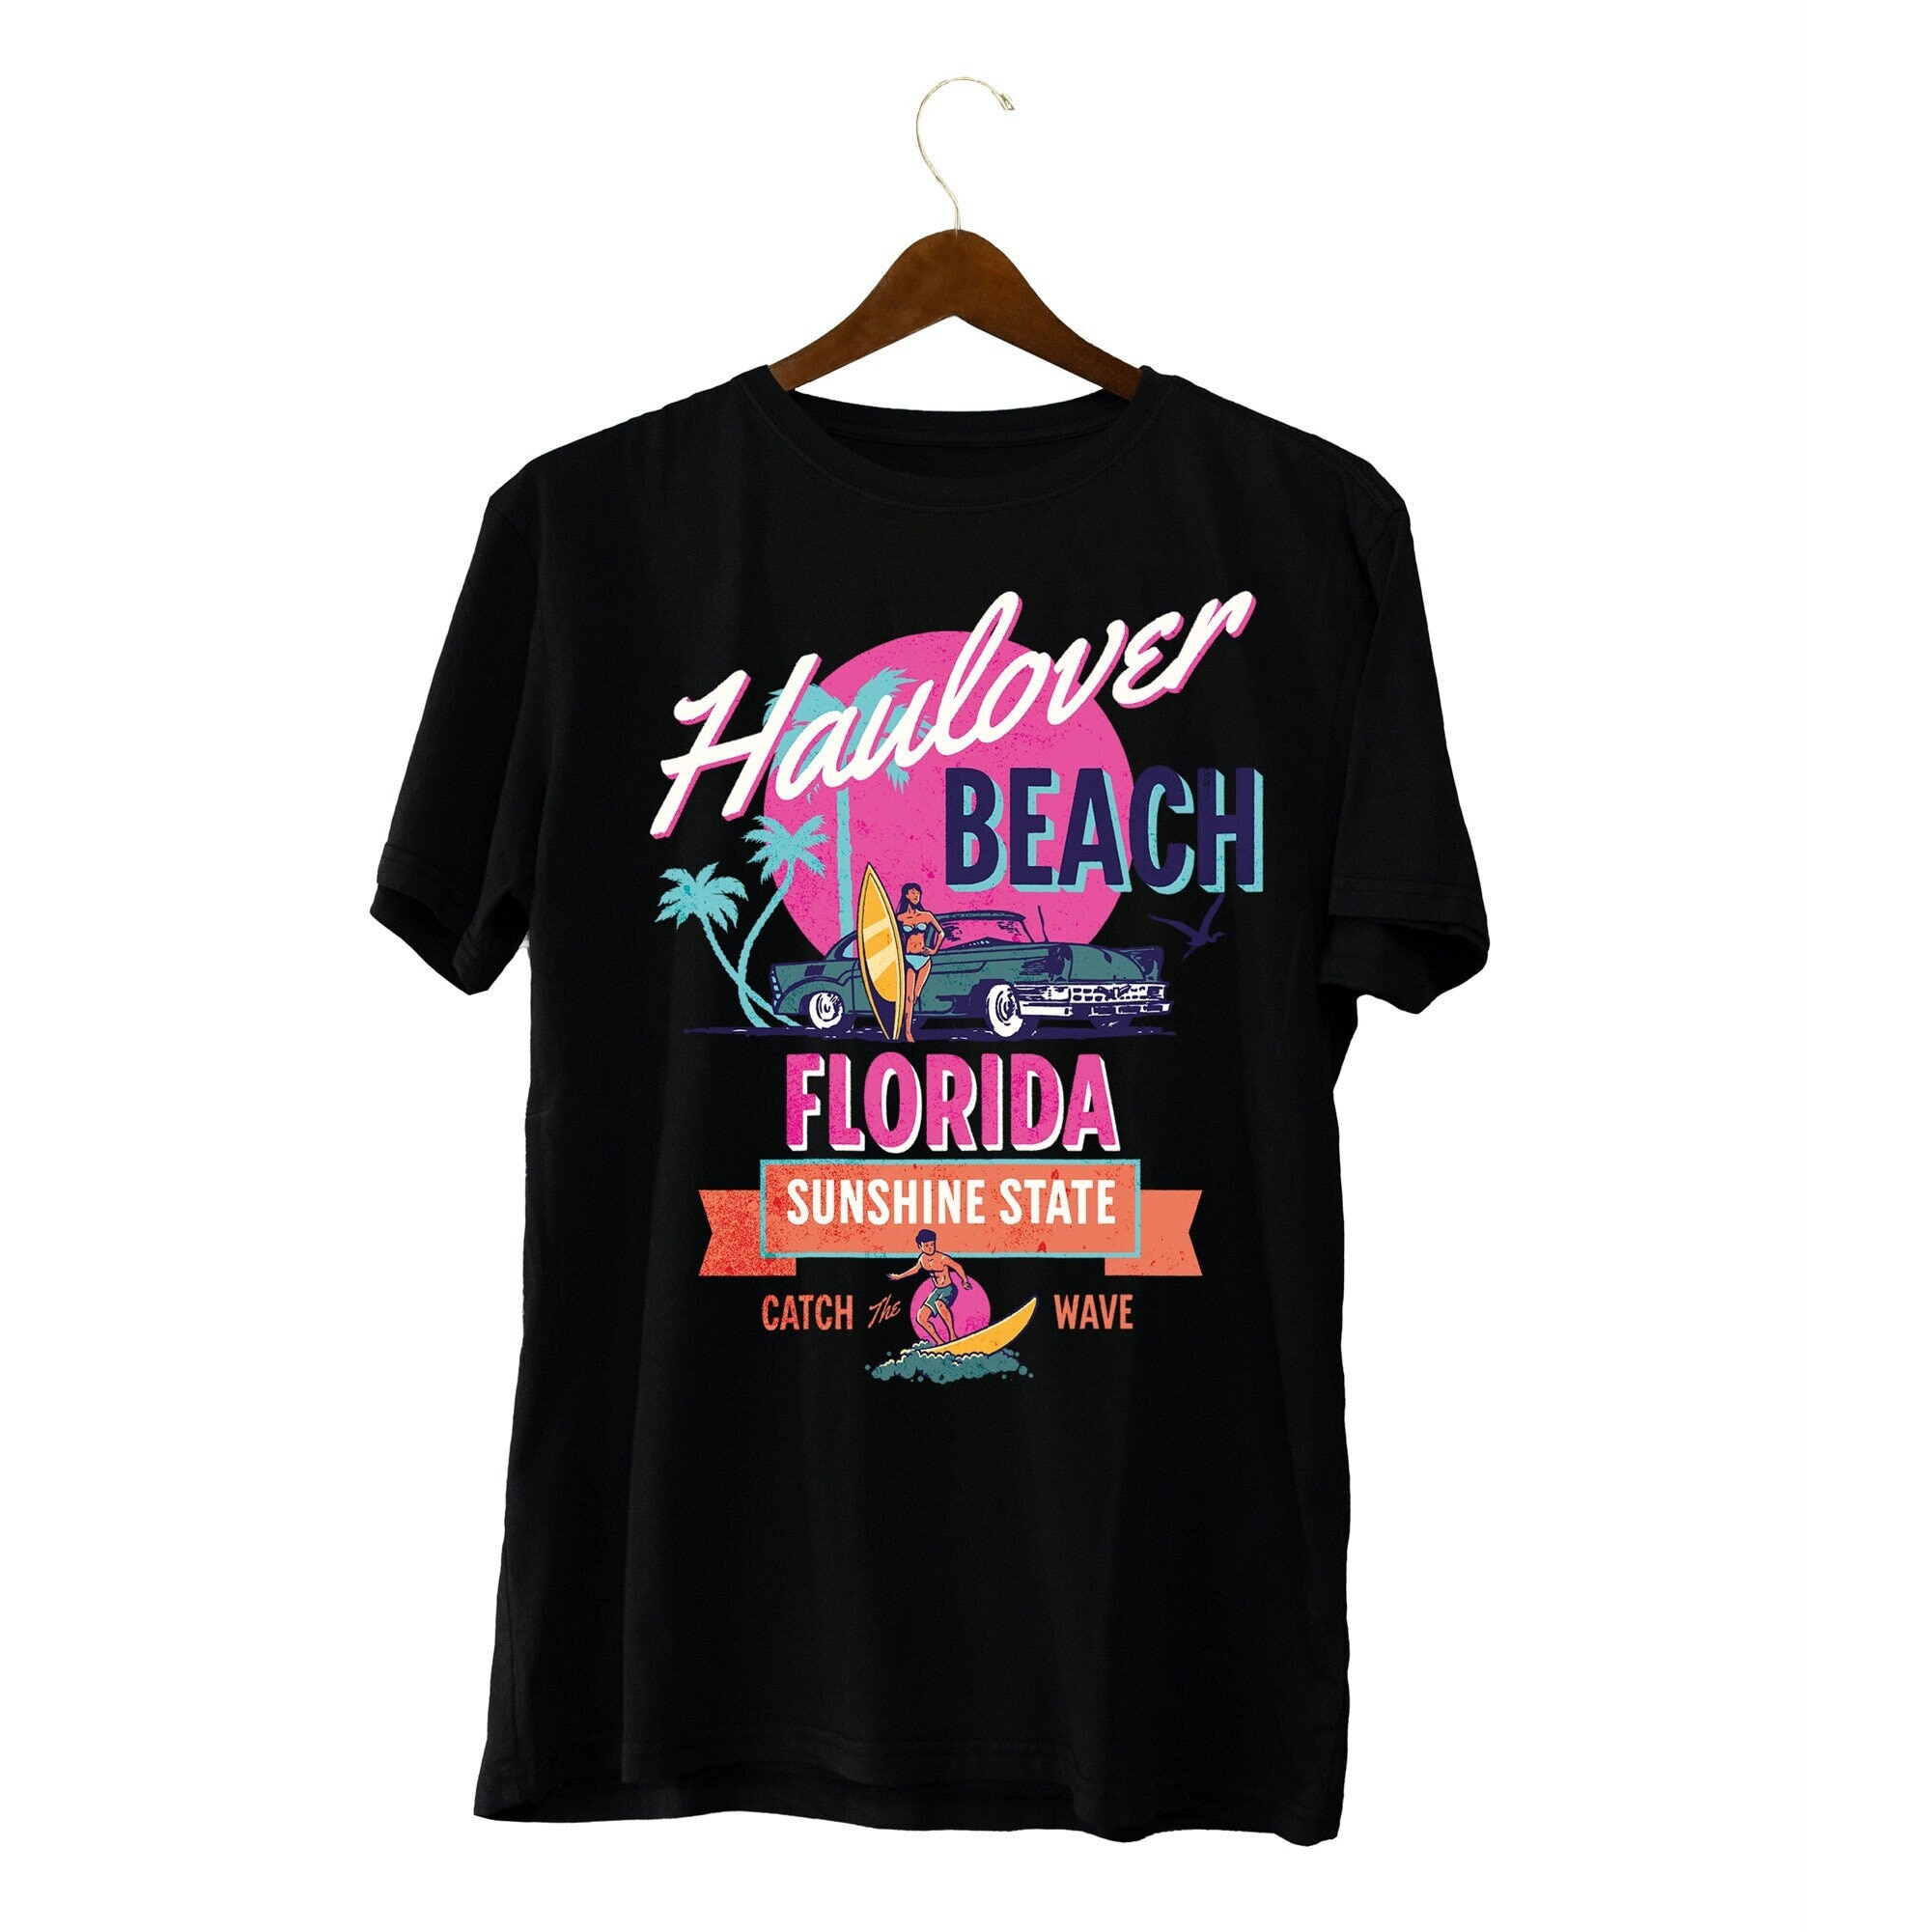 Haulover Beach Florida T-shirt Florida Tshirt Florida